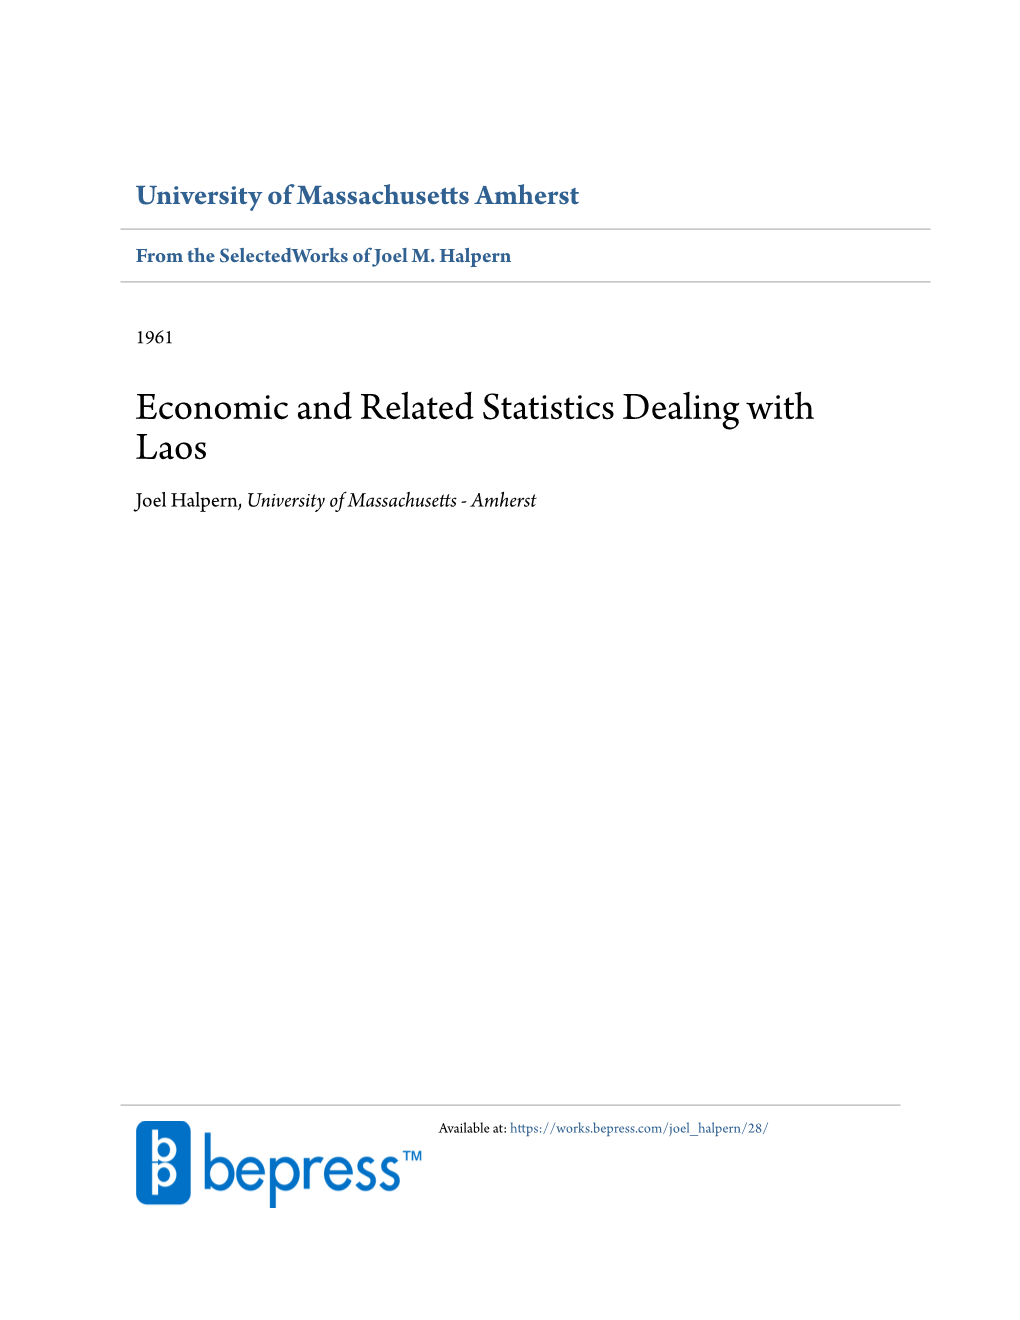 Economic and Related Statistics Dealing with Laos Joel Halpern, University of Massachusetts - Amherst